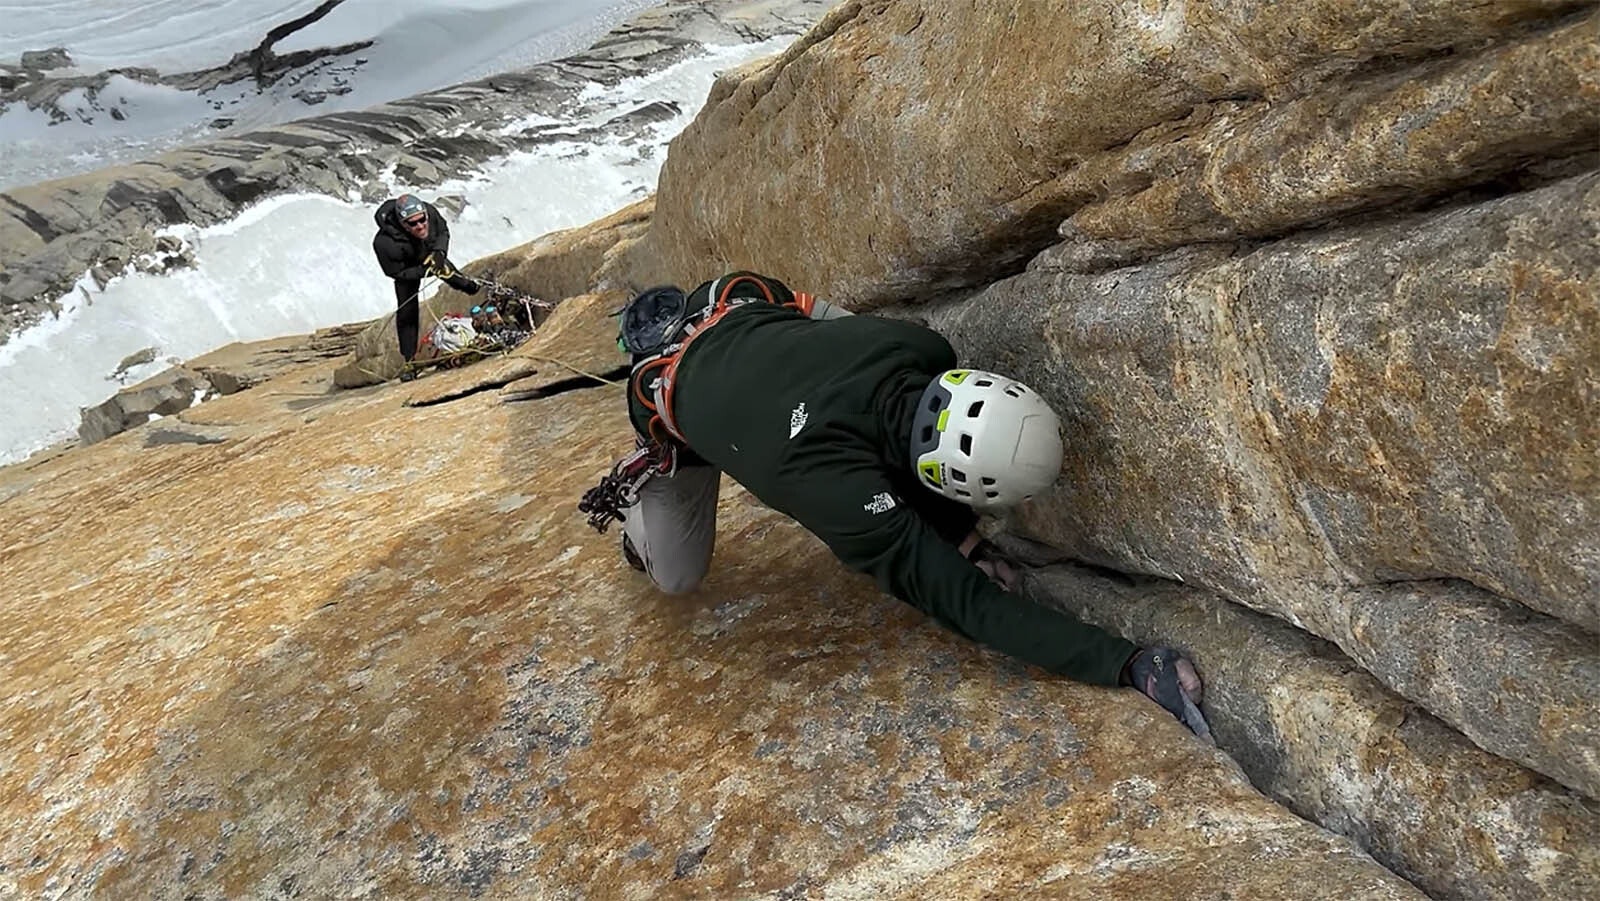 Finding handholds in the narrow cracks of vertical rock.